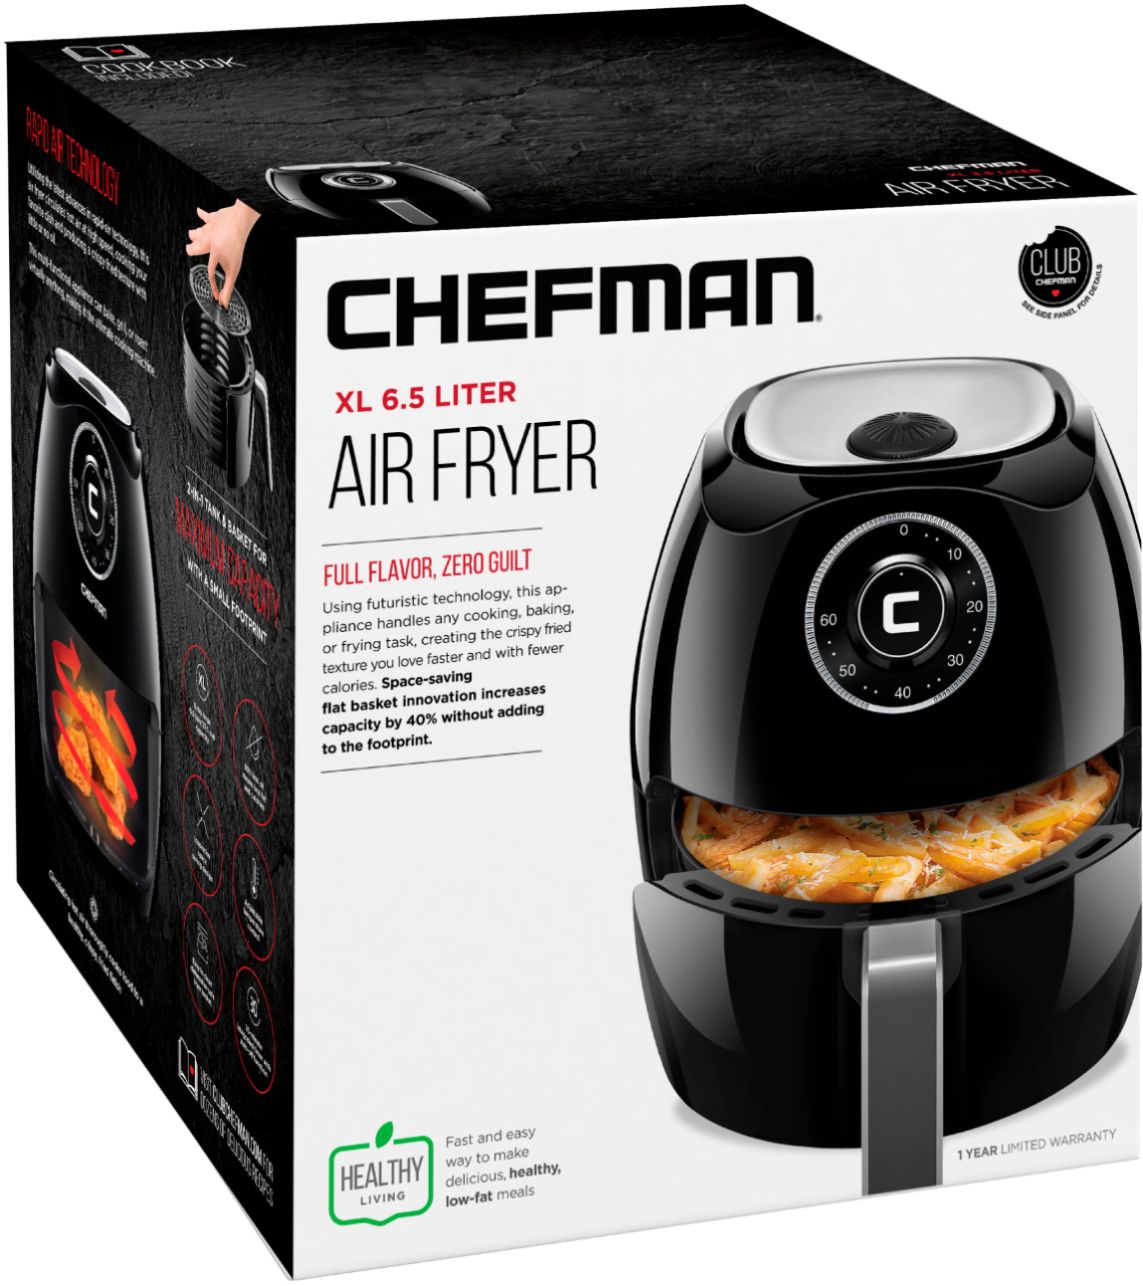 Chefman 6L Digital Air Fryer, Dehydrator, Rotisserie Combo Black RJ38-6-RDO  - Best Buy